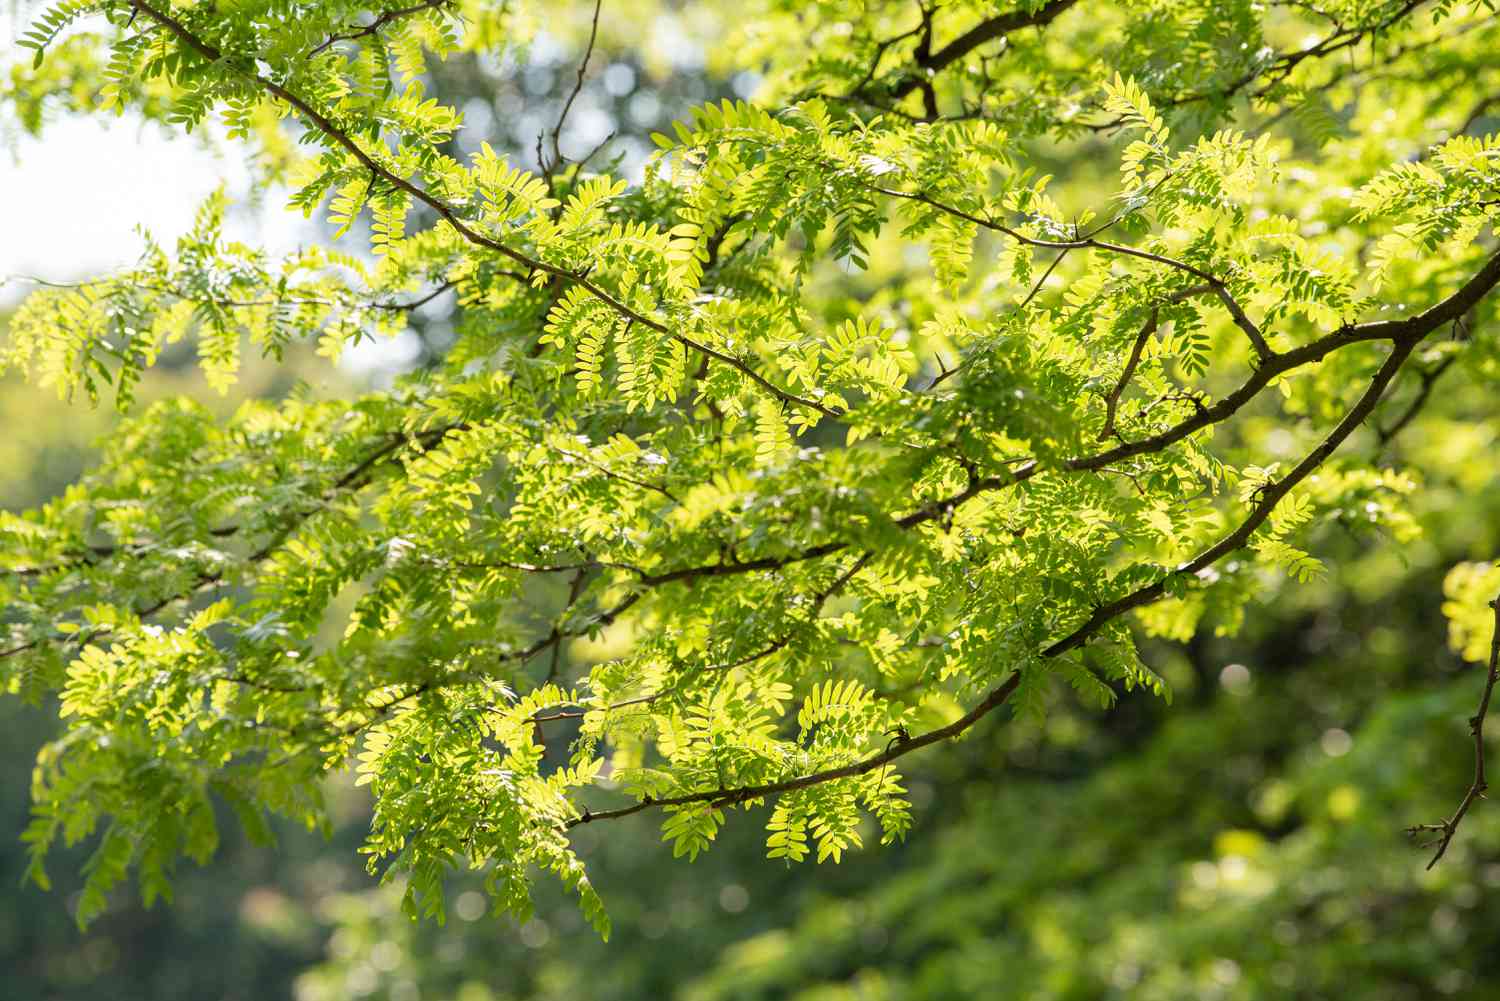 Sunburst honeylocust tree with fern-like leaves on sprawling thin branches